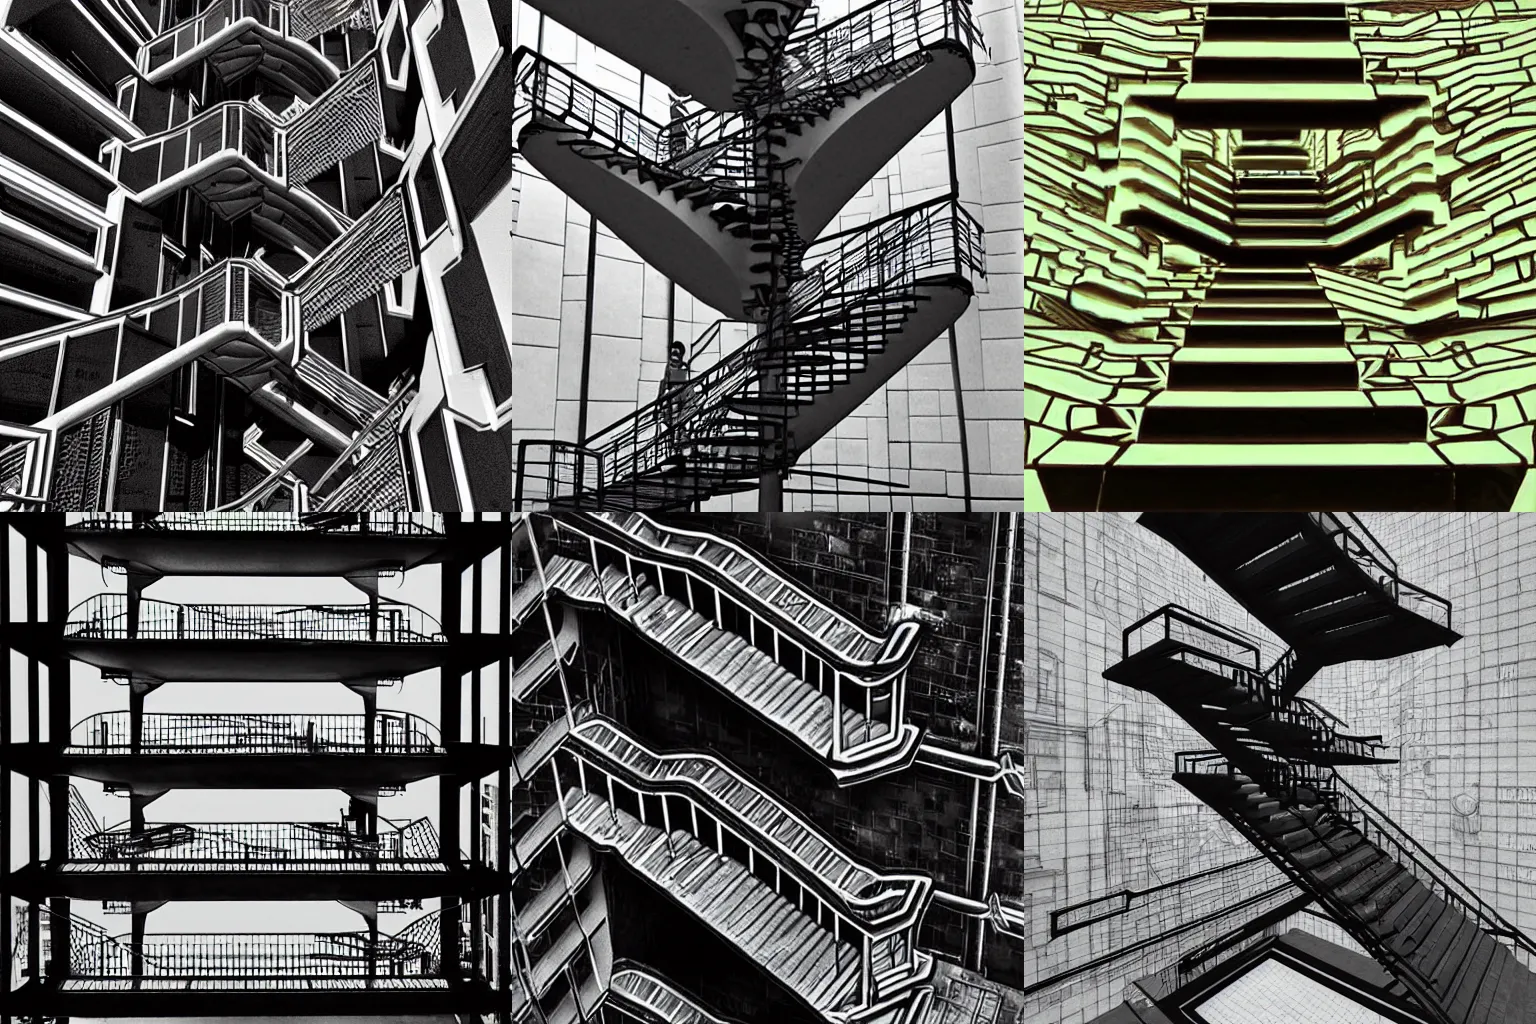 Prompt: Escher stairs in cyberpunk style